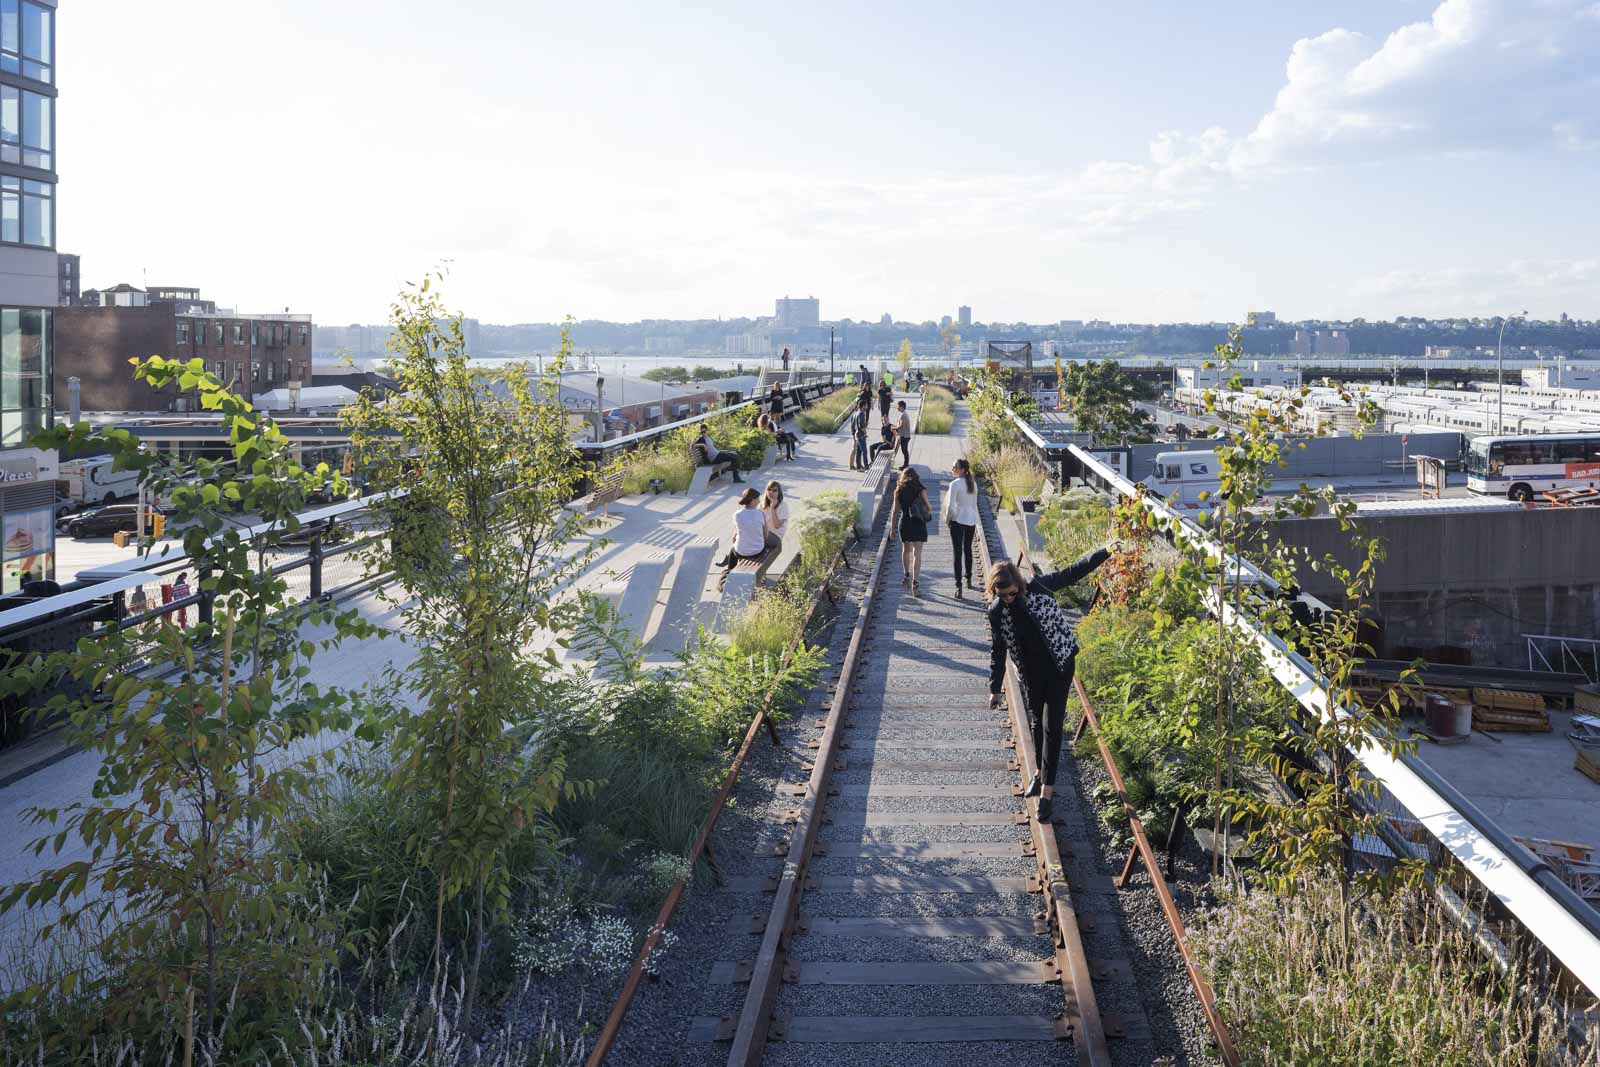 New York High Line, David Zwirner